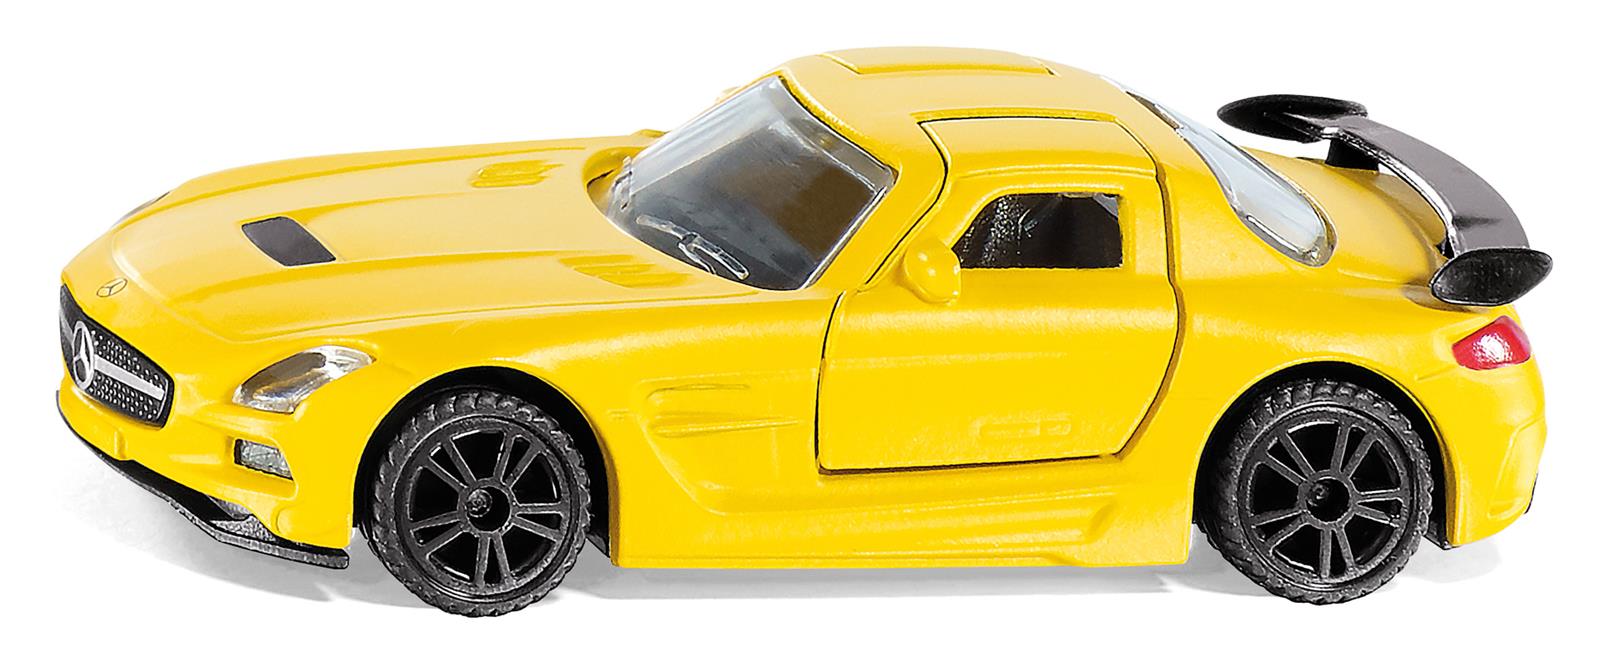 MERCEDES-BENZ SLS AMG Metall 4 Farben Modellauto Modell Auto Spielzeugauto 60